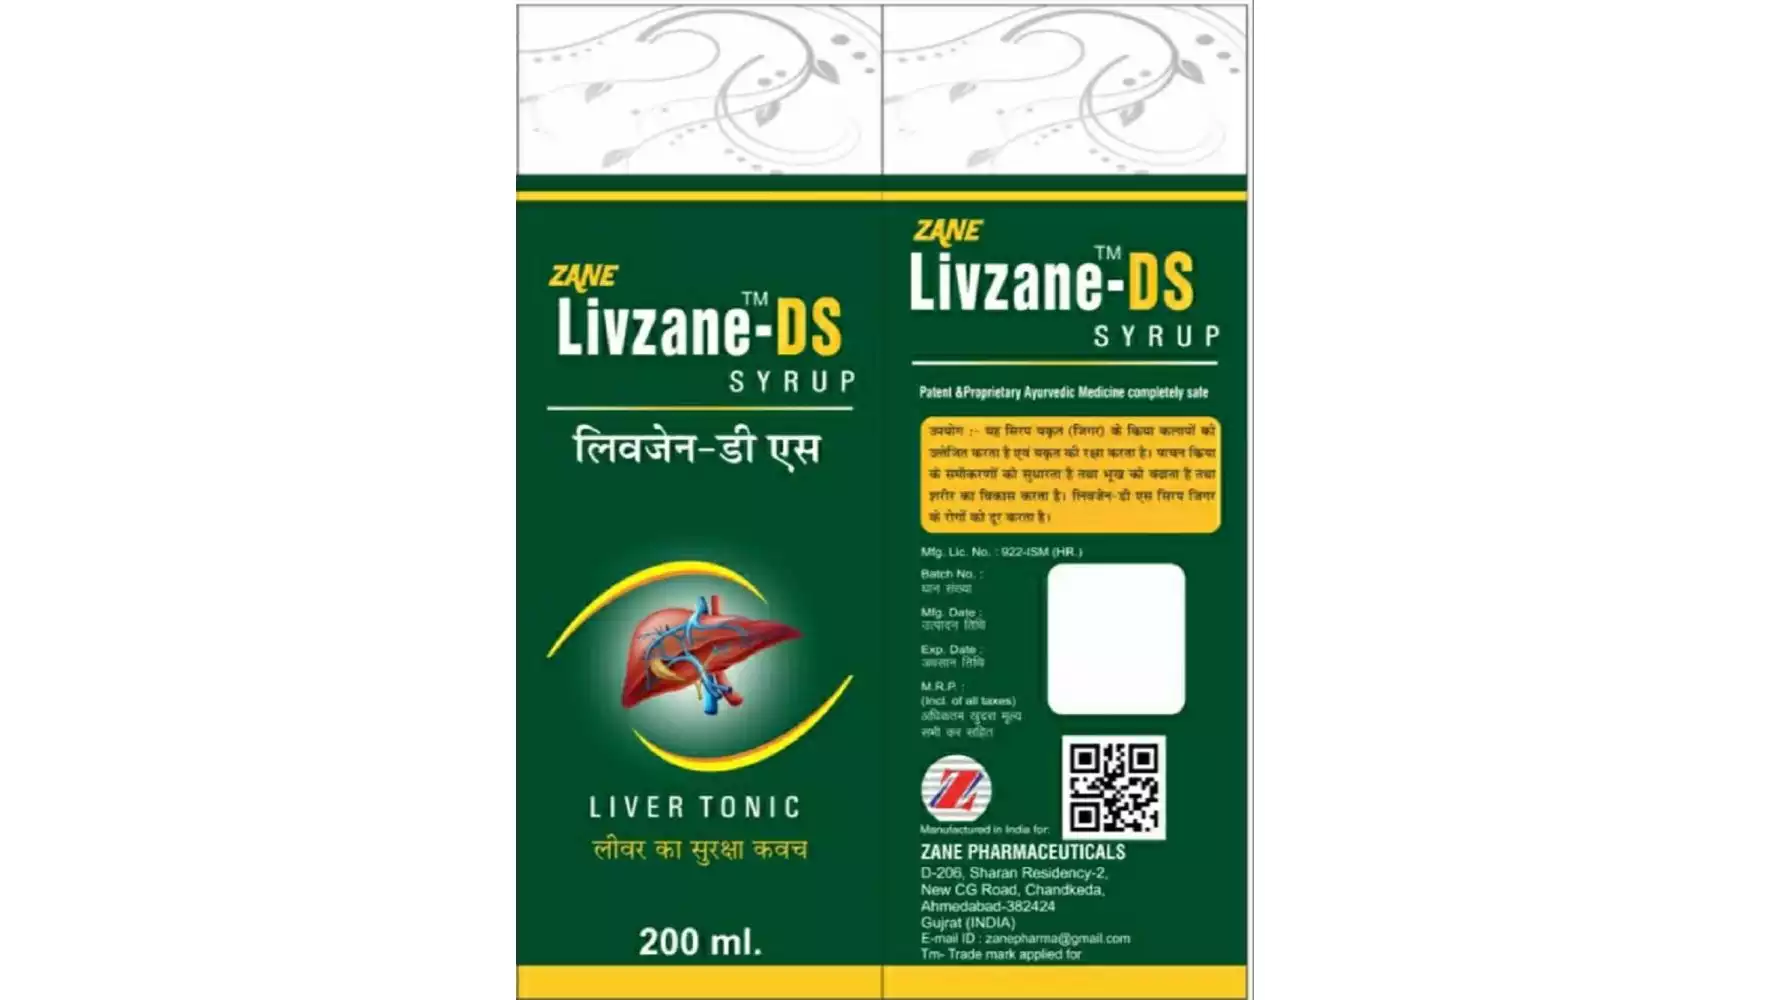 Zane Livzane-DS Syrup (200ml)